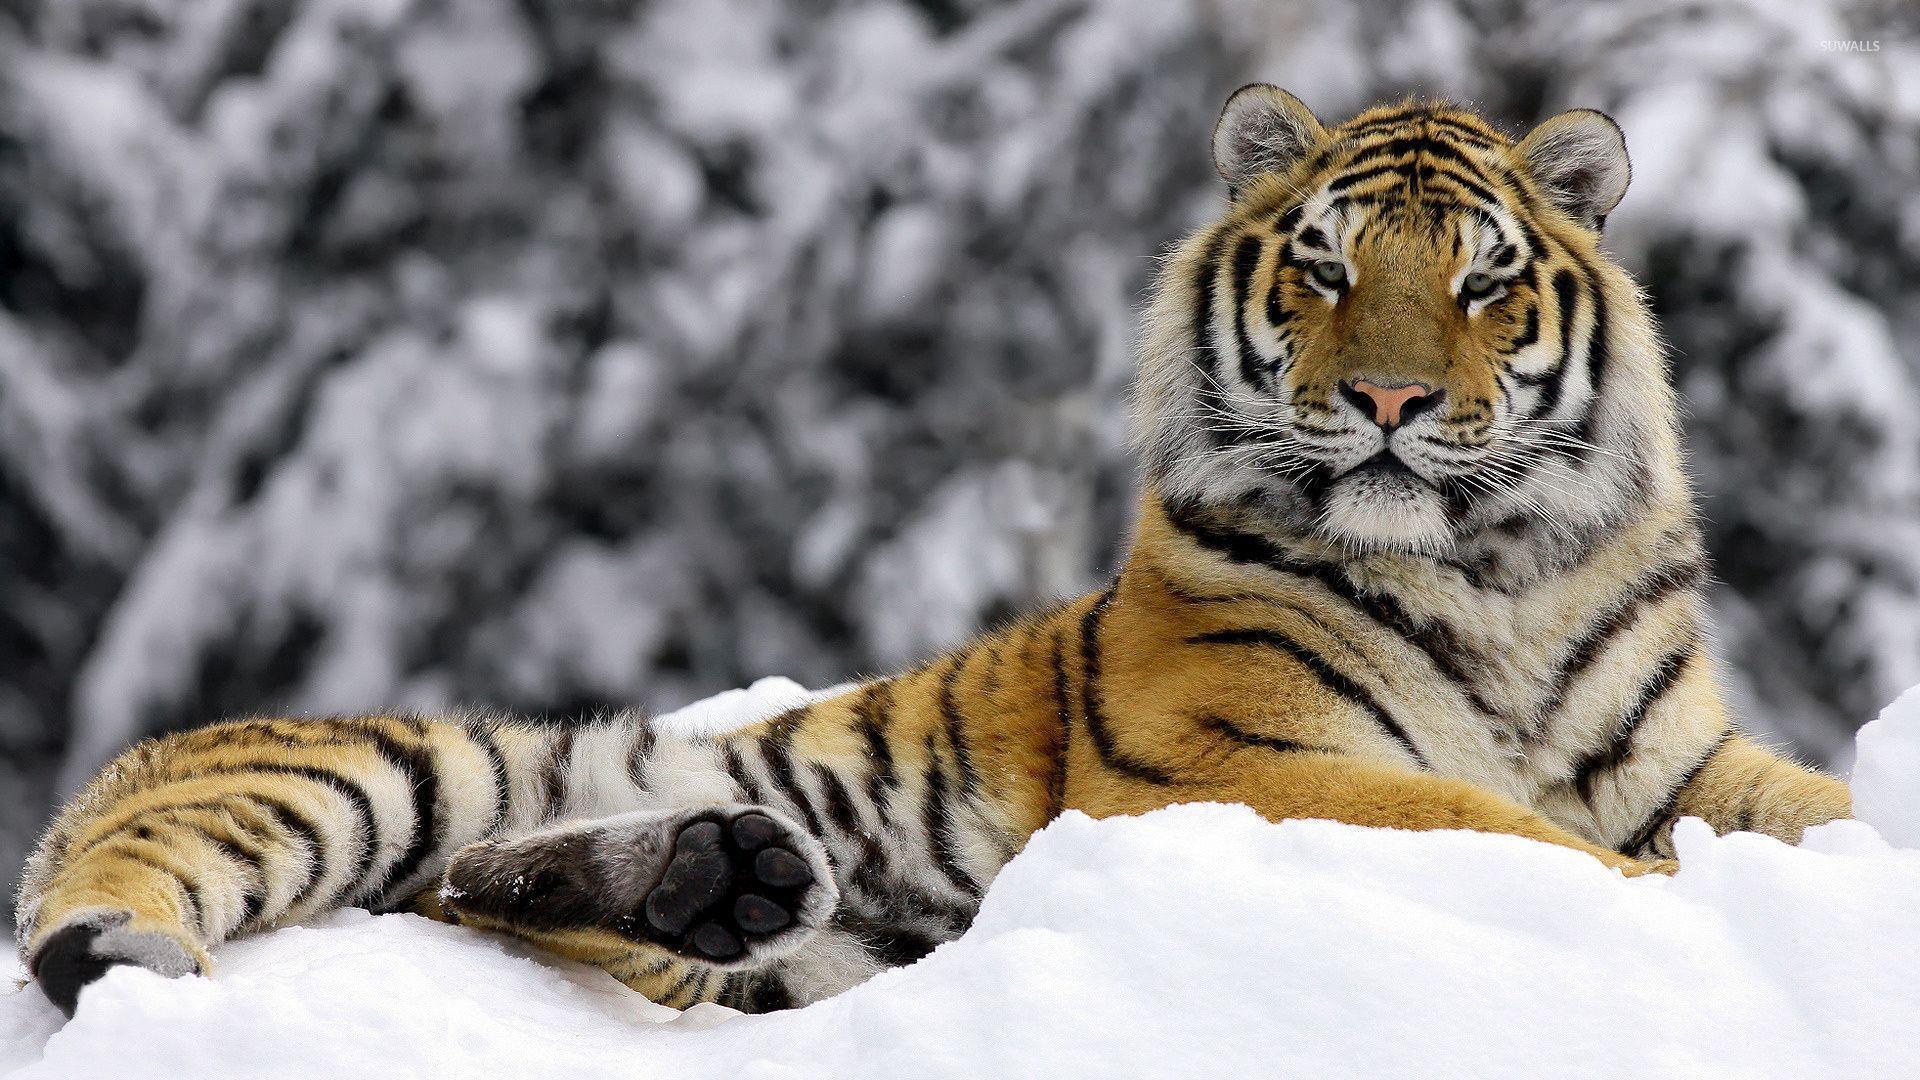 Tiger in the snow wallpaper wallpaper